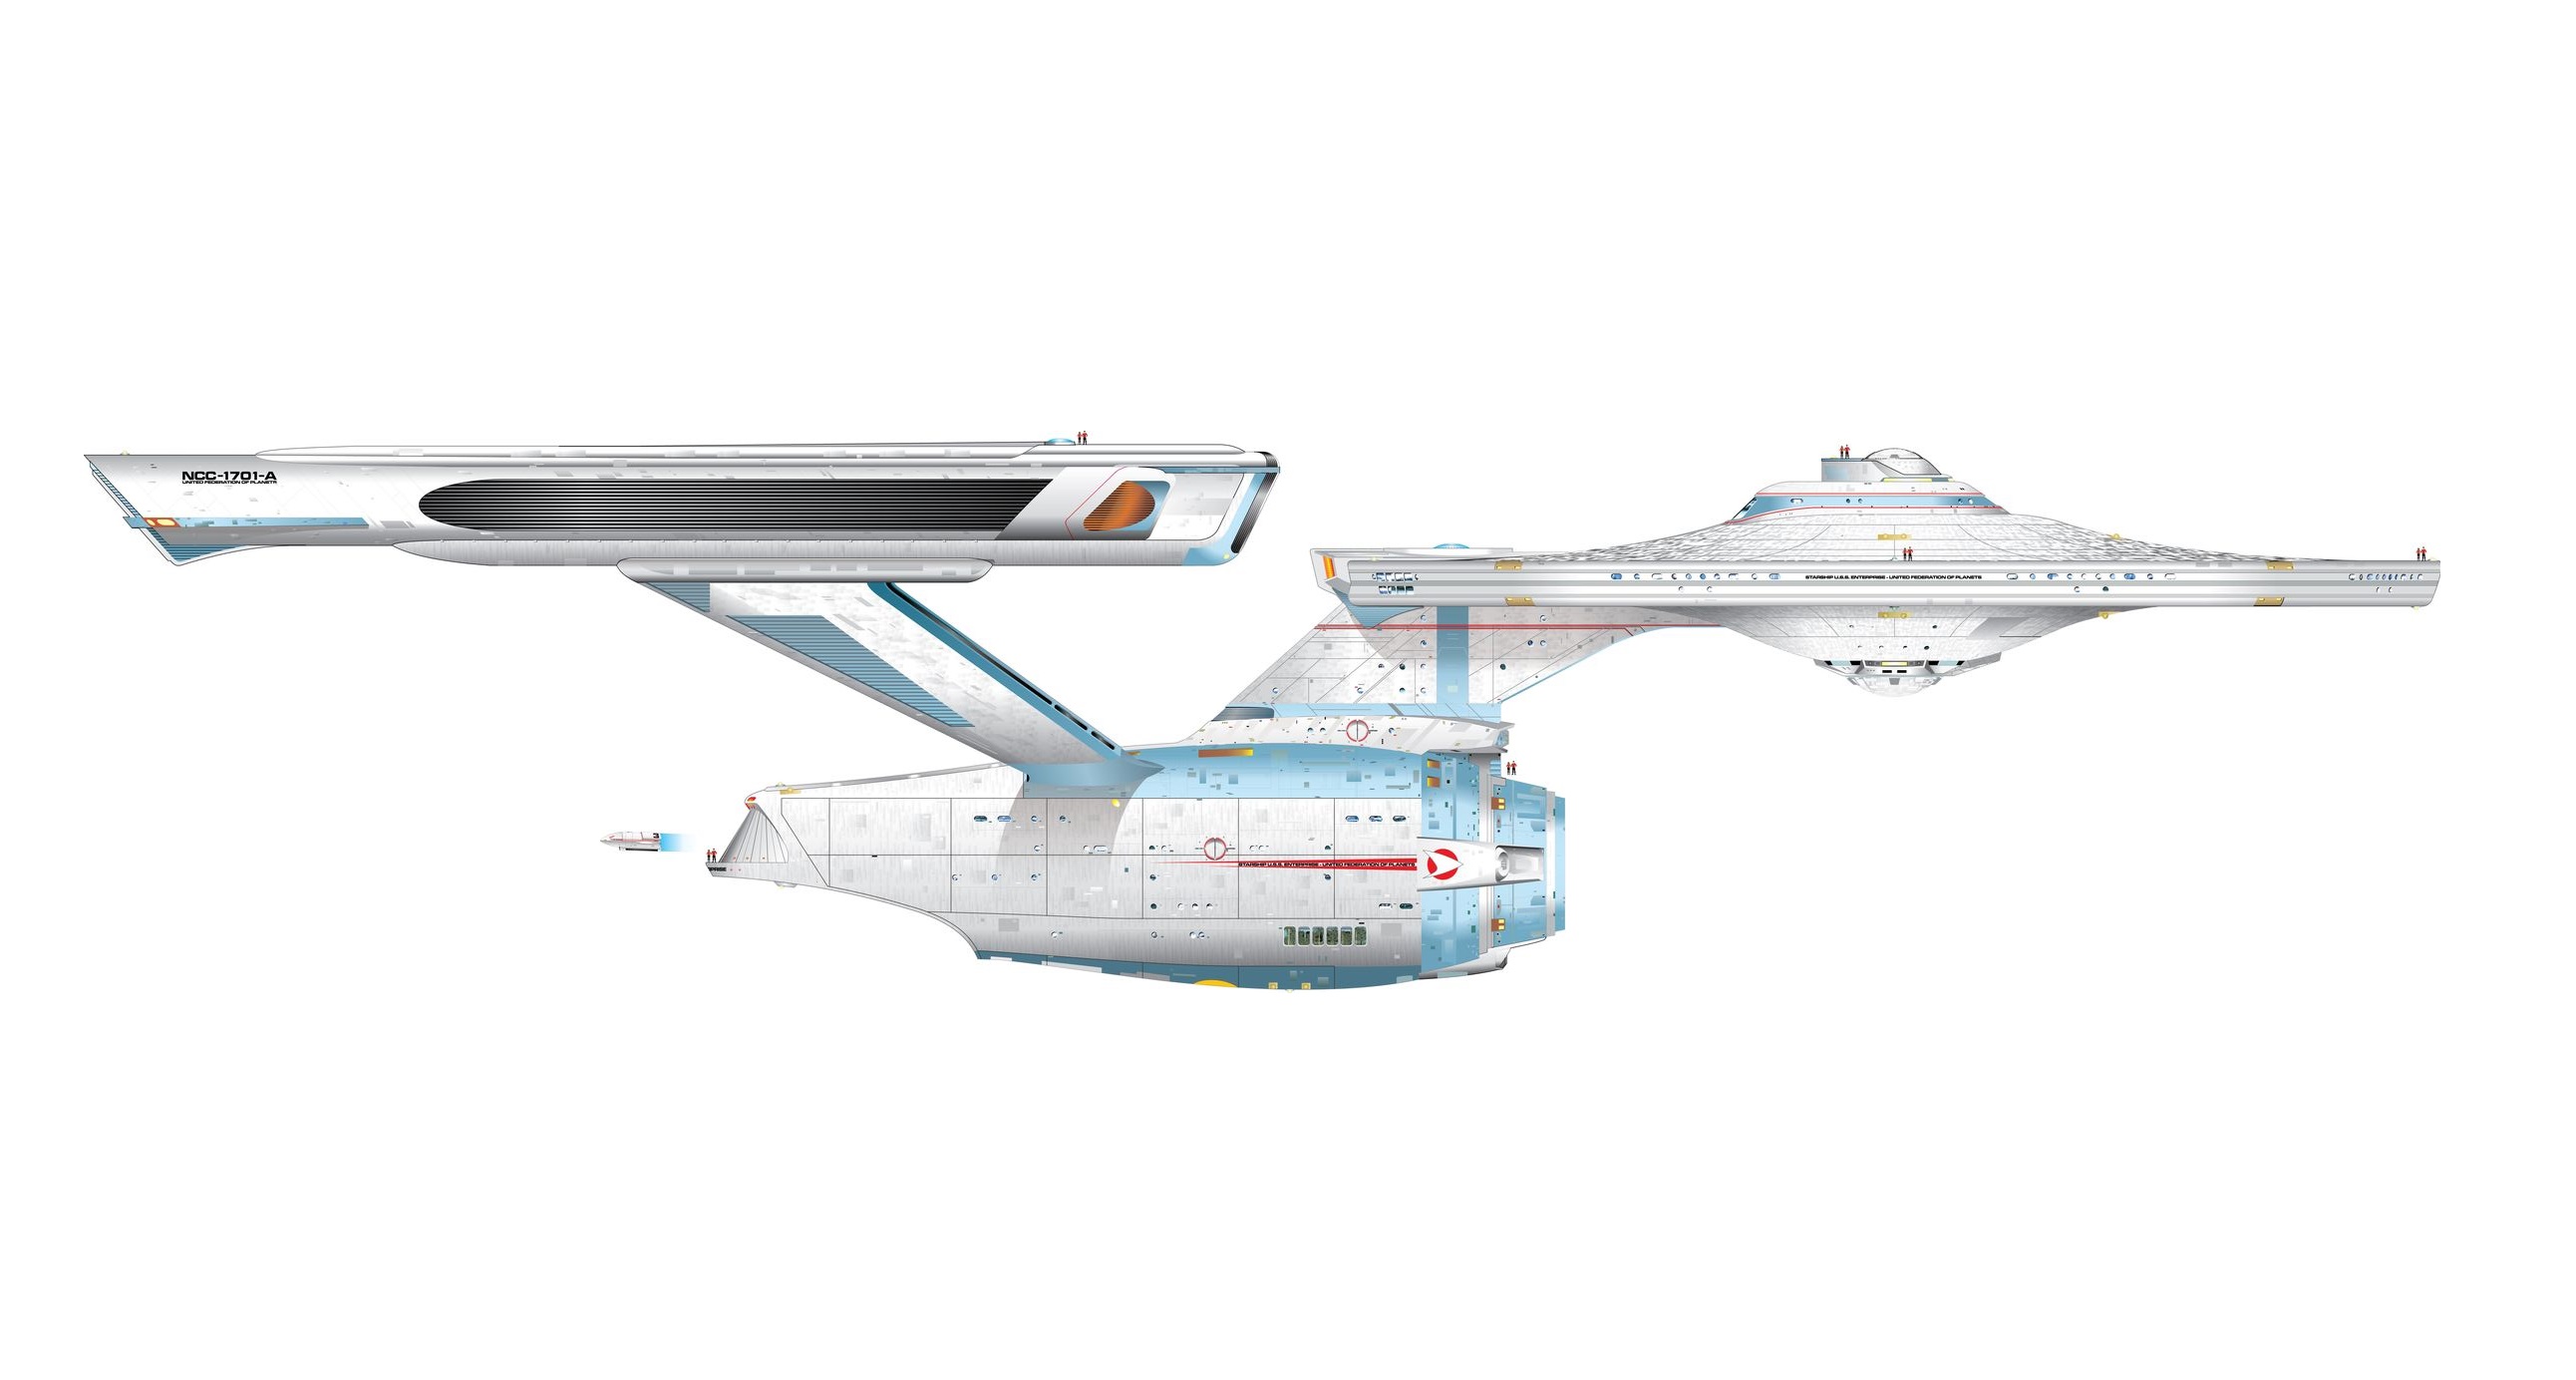 Enterprise-NCC-1701-A